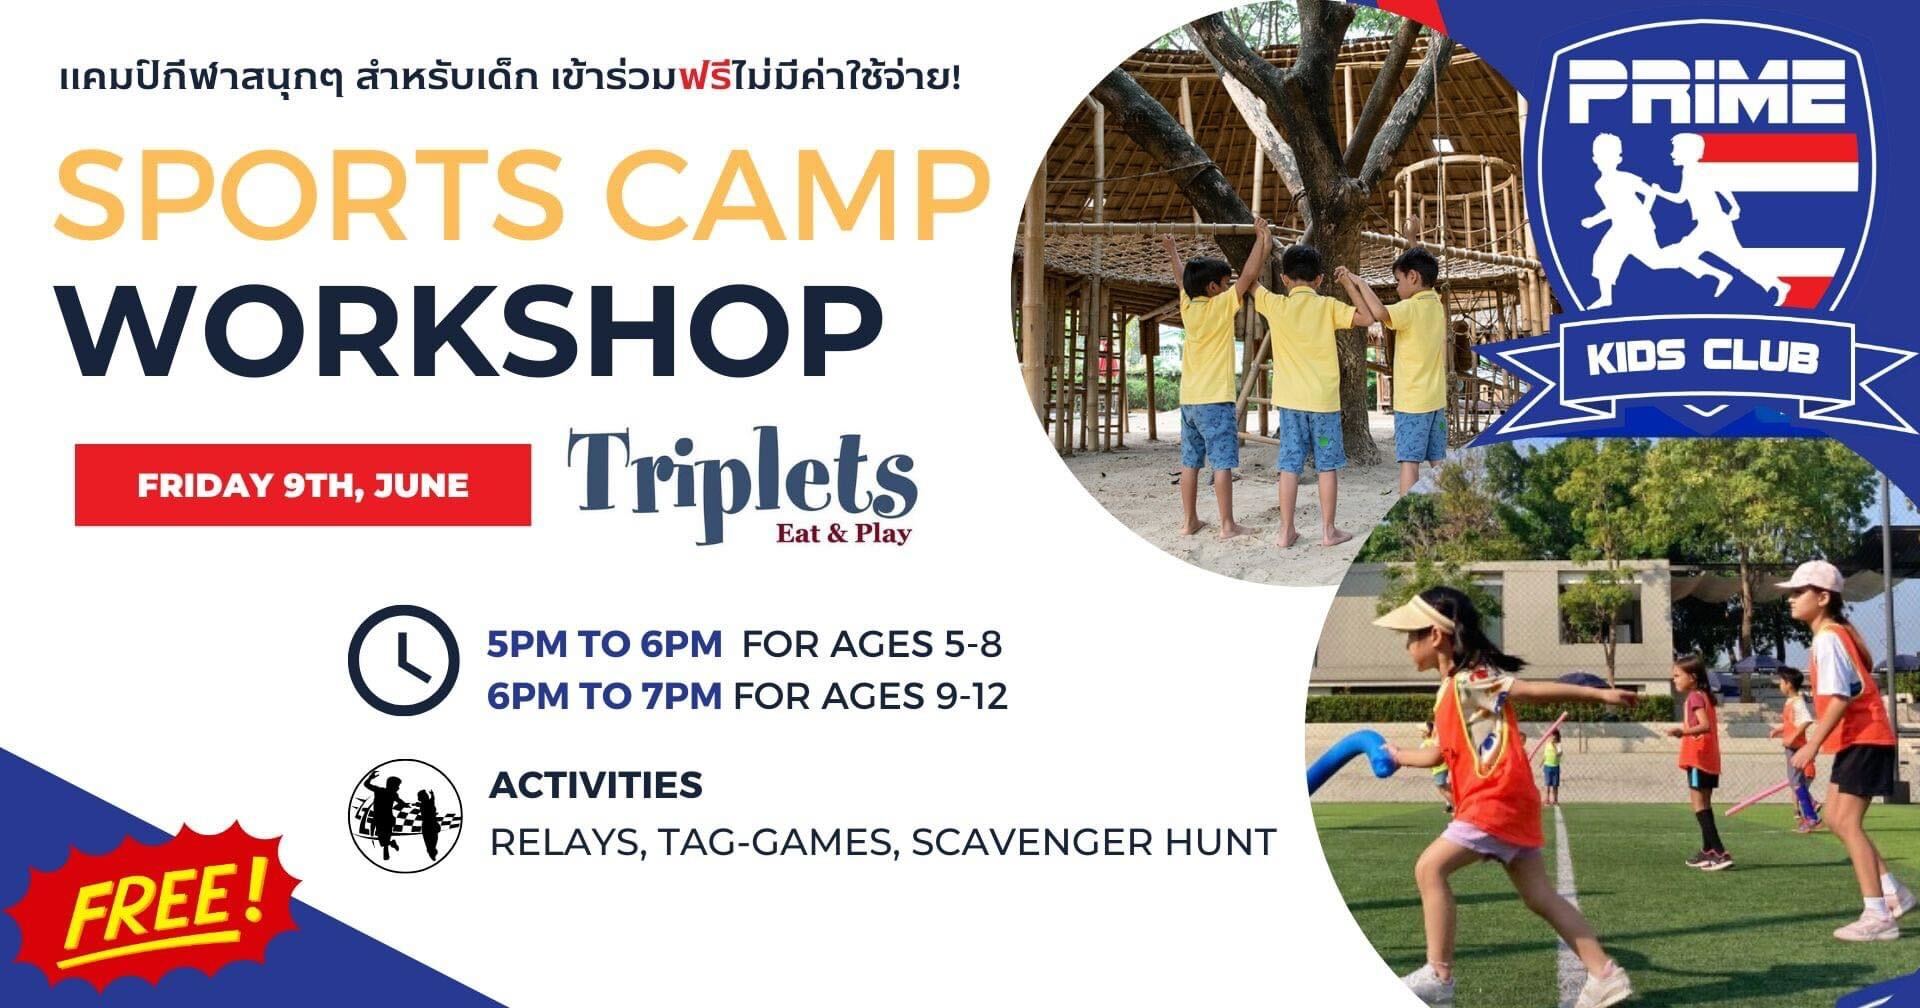 Prime Kids Club - Sports Camp Workshop